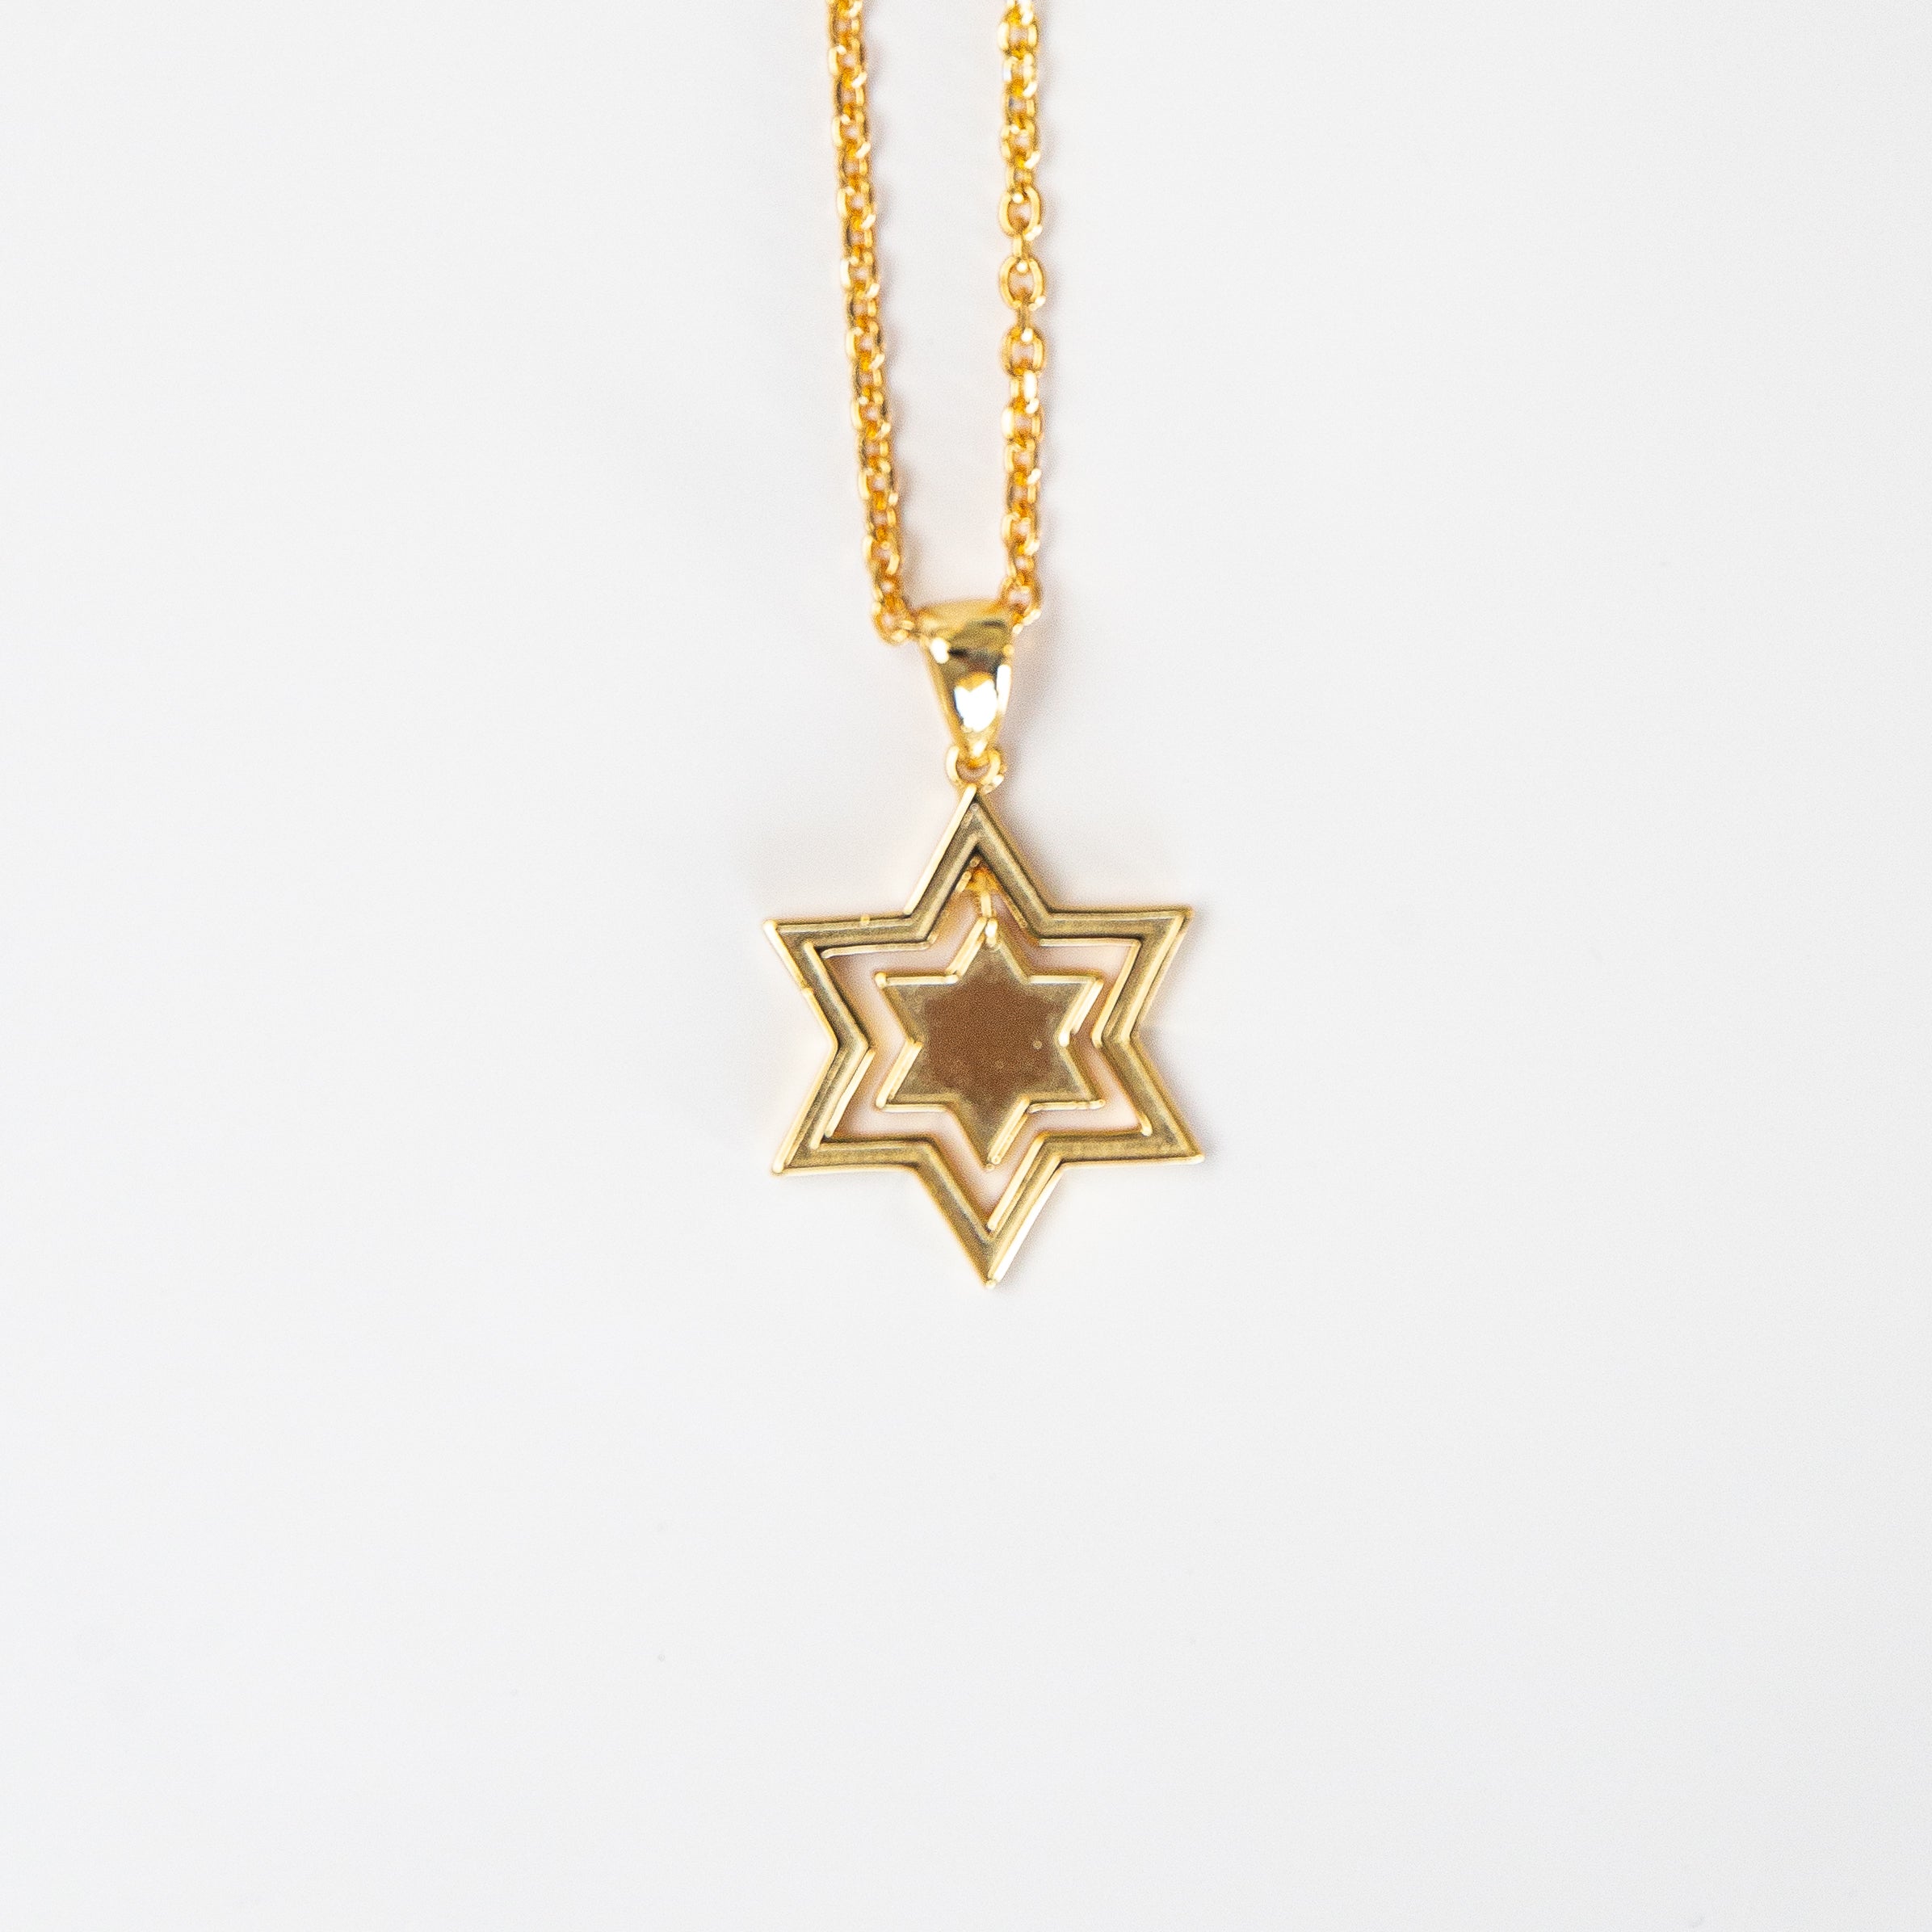 Gold Star of David Necklace - Jewish Magen David Israel Jewelry Length 16